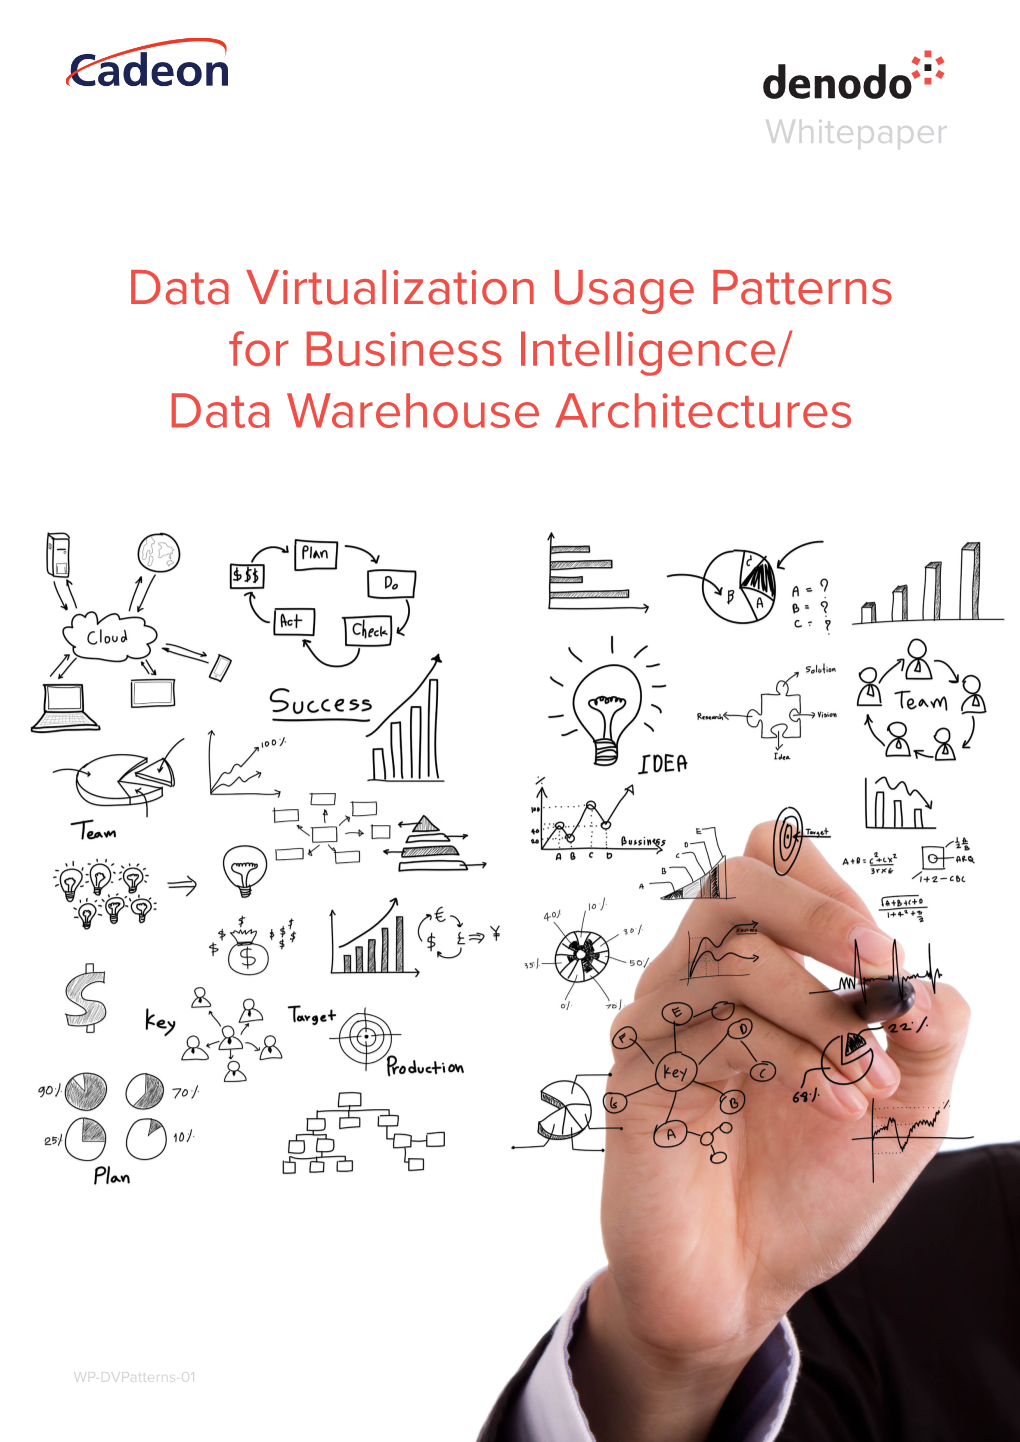 Data Virtualization Usage Patterns for Business Intelligence/ Data Warehouse Architectures